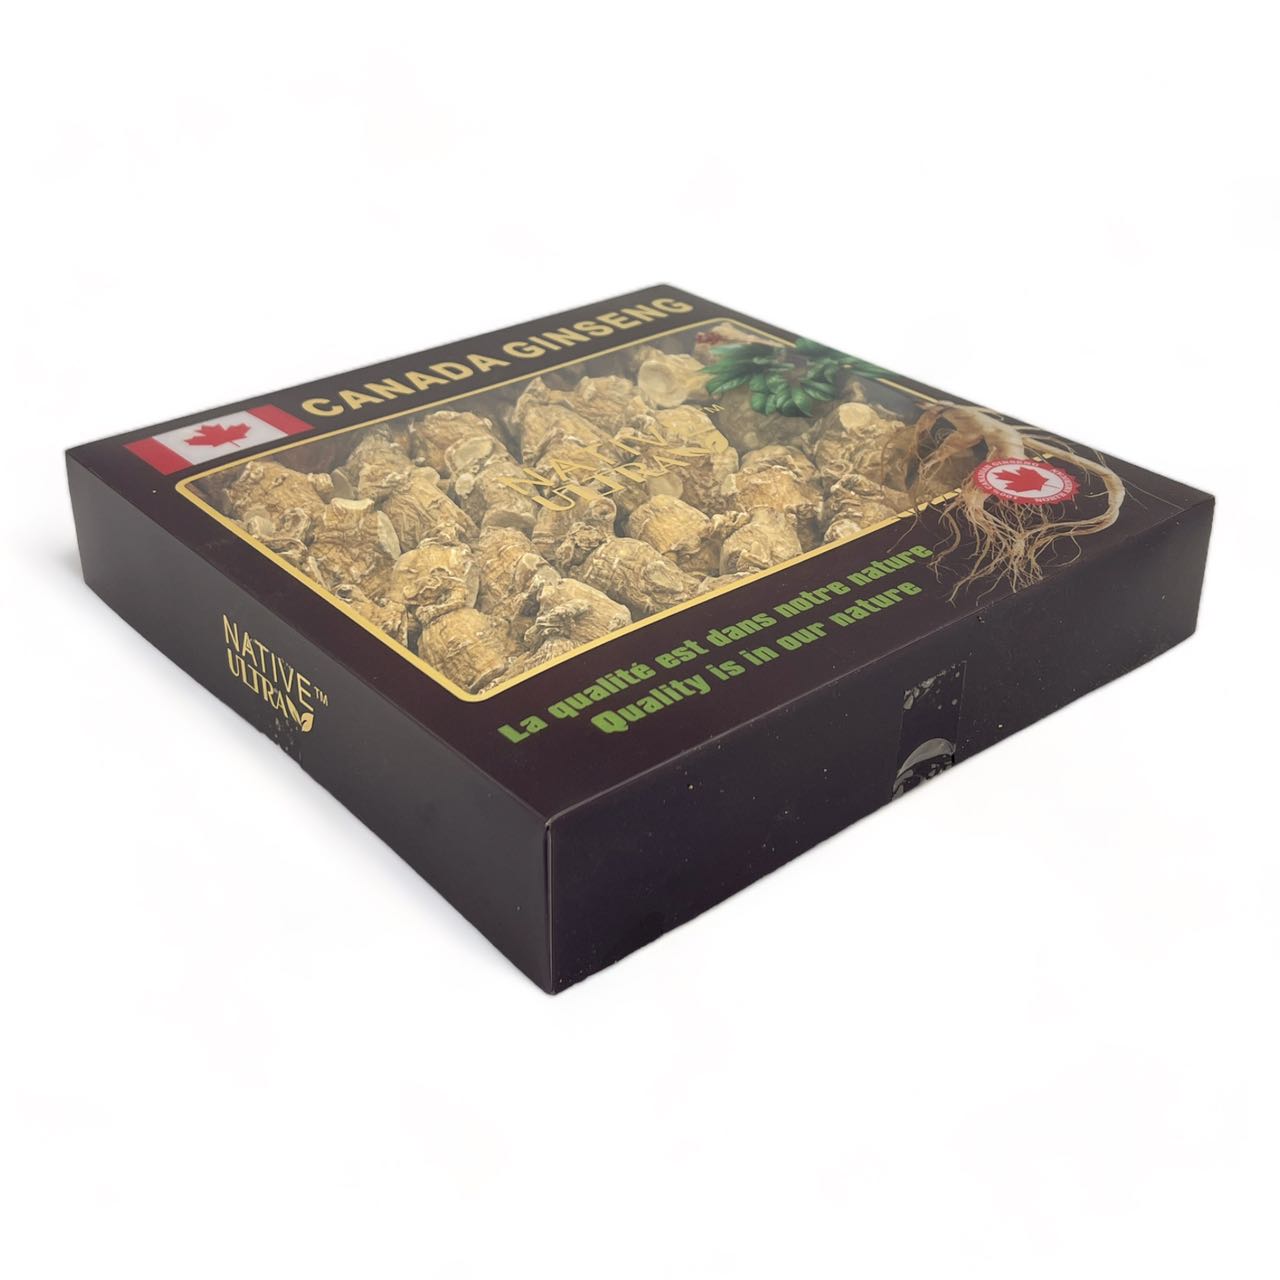 "NATIVE ULTRA" Canadian Ginseng (10g/piece), 454g/box